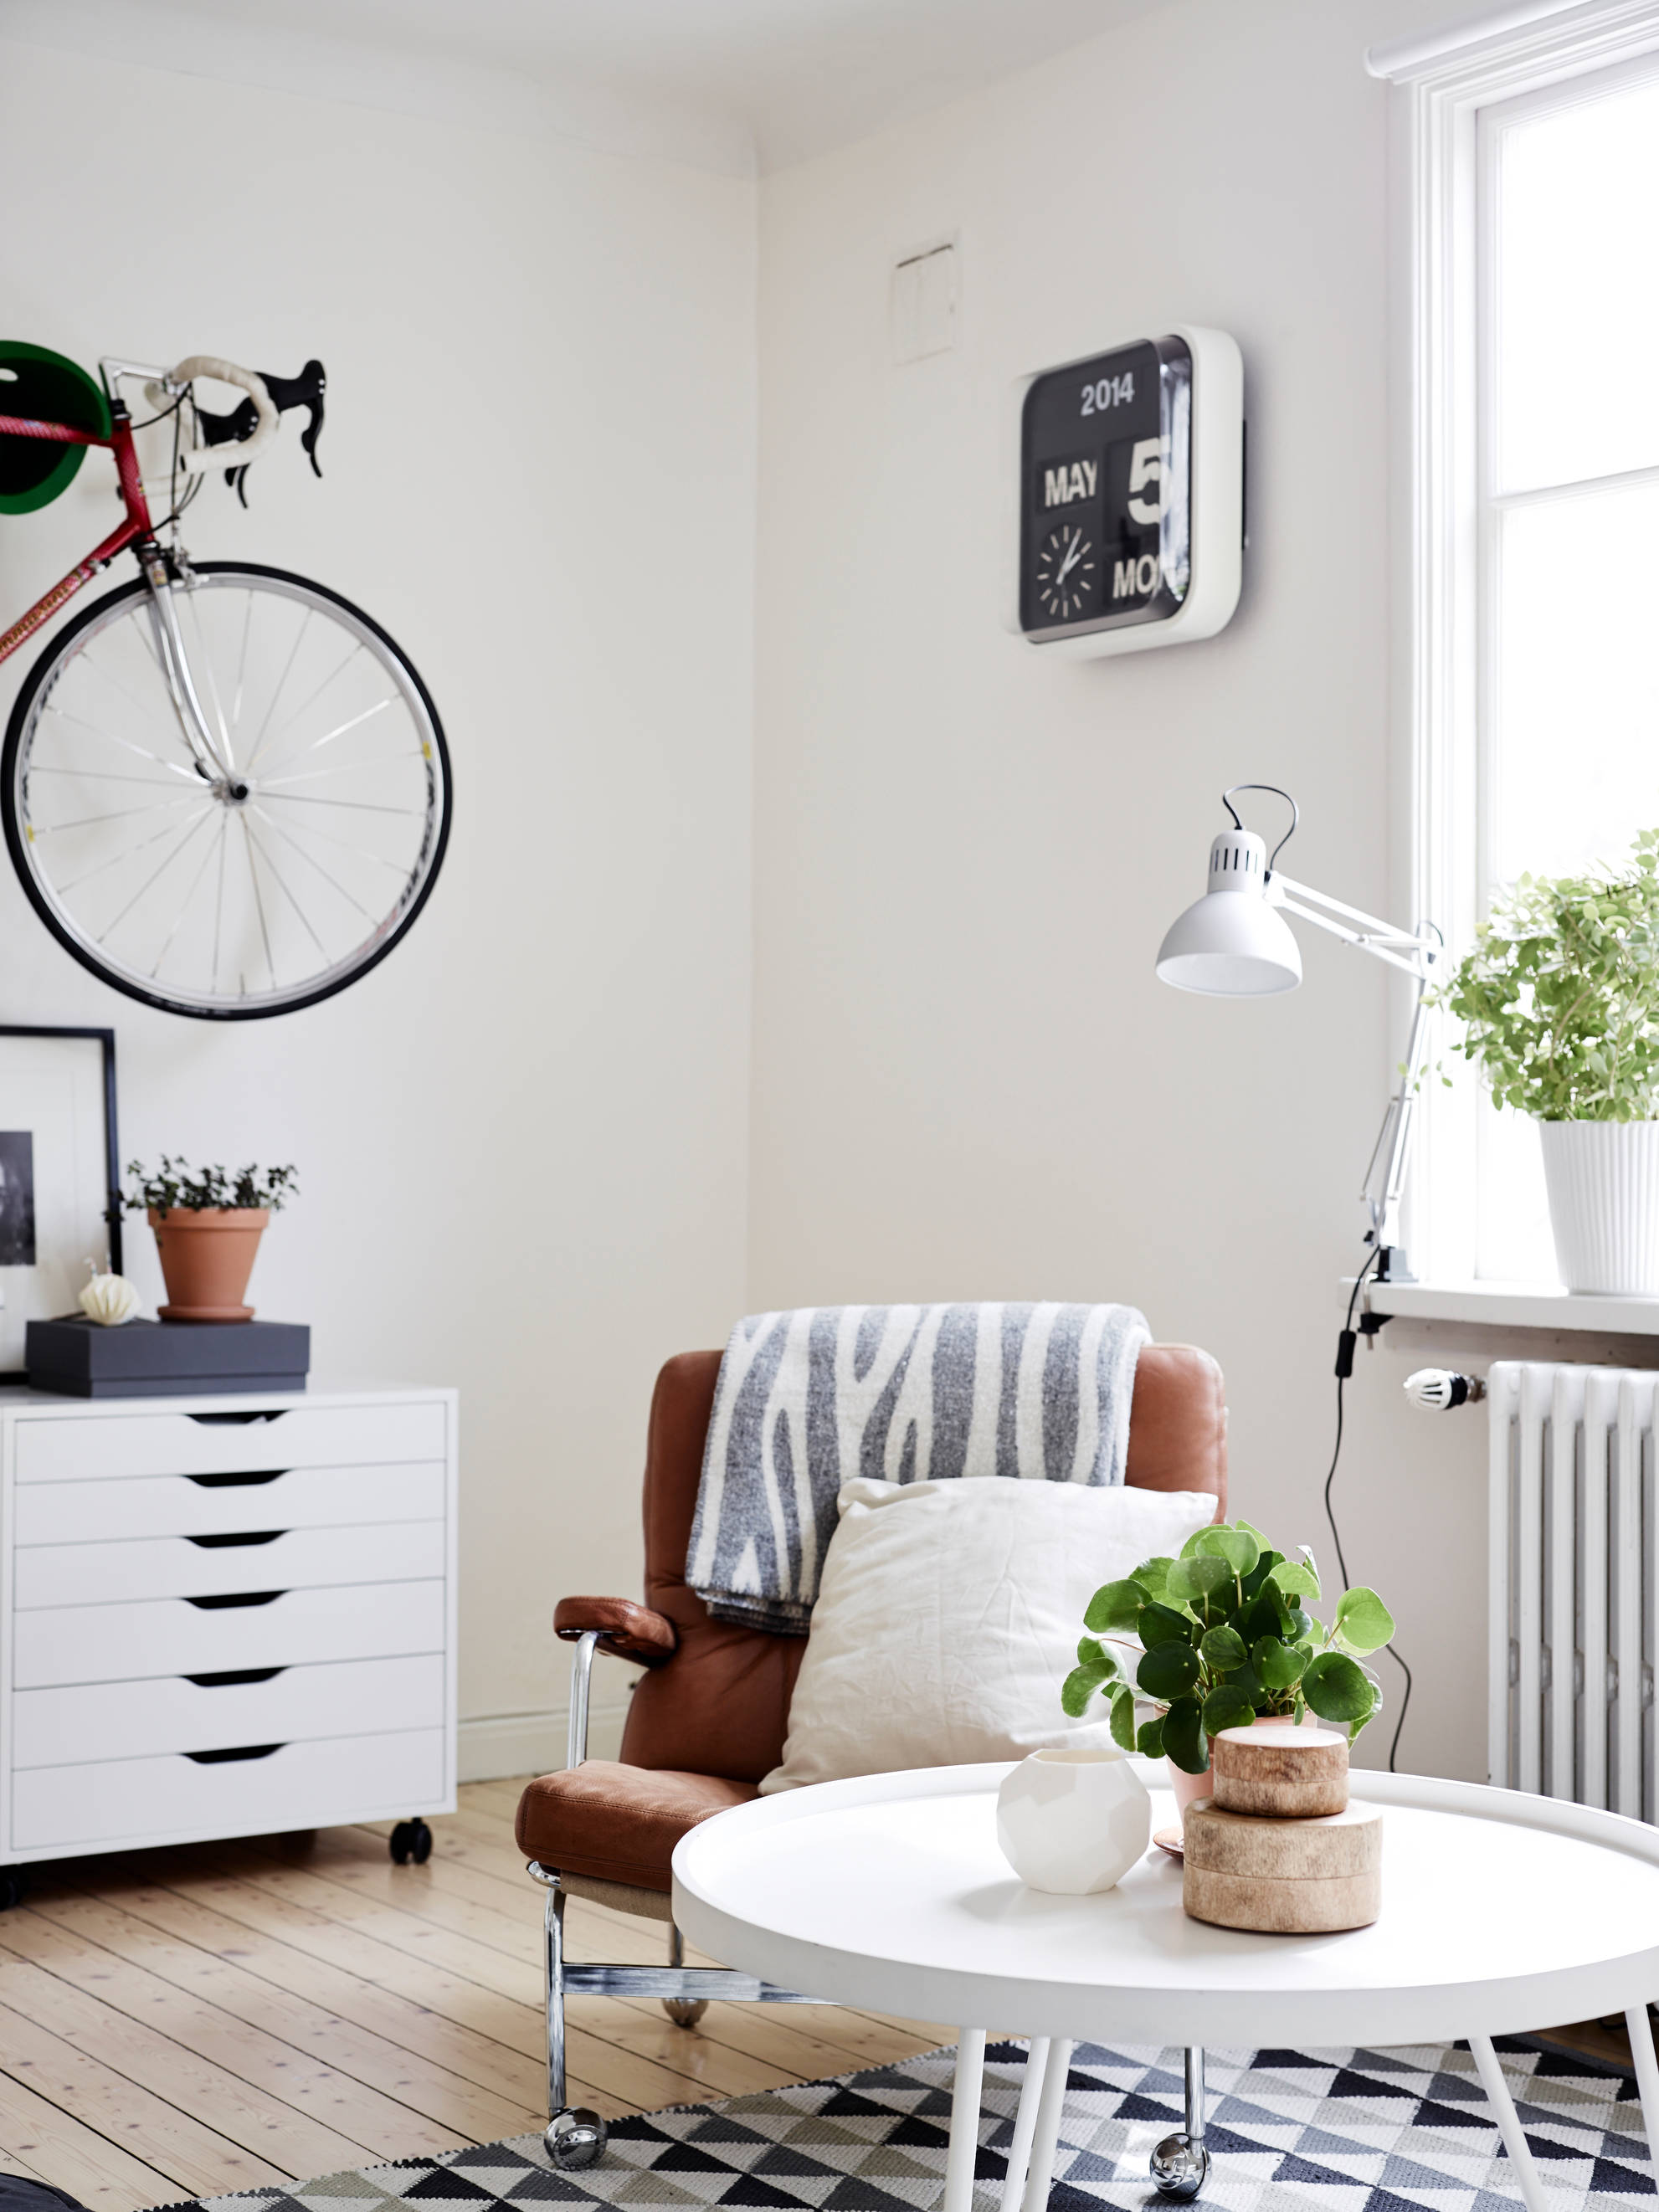 Bike in the living room - via Coco Lapine Design